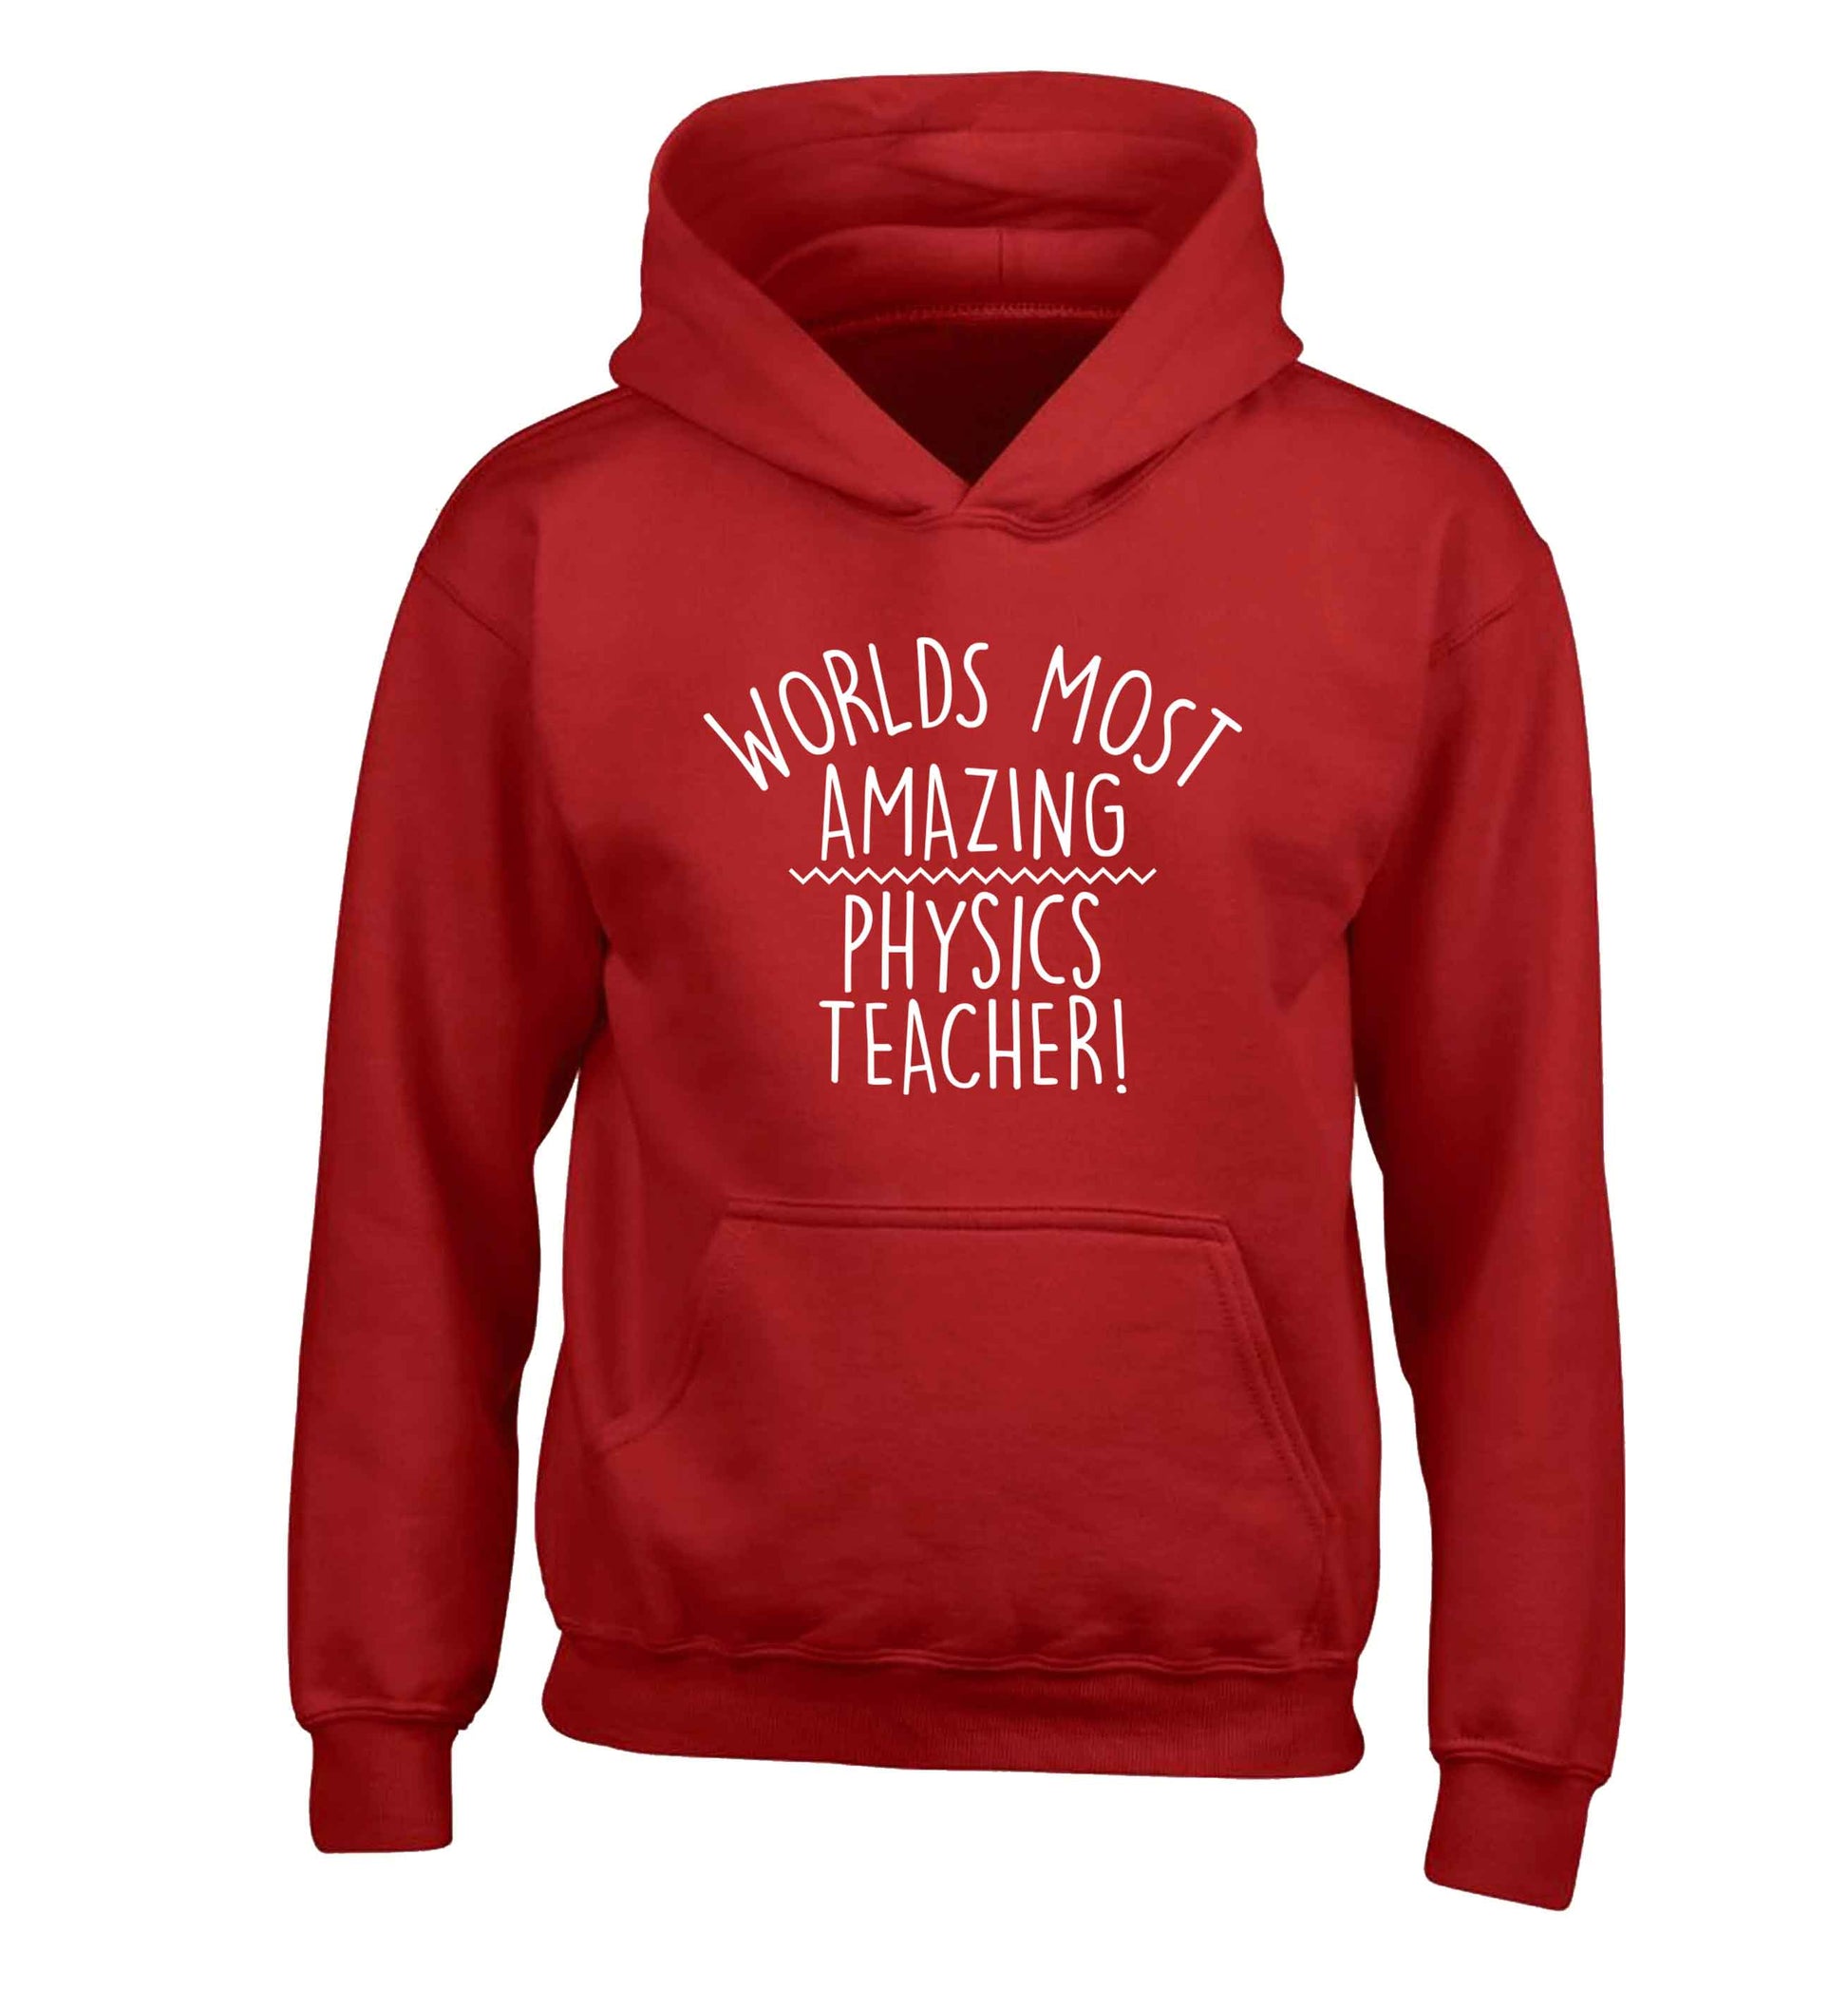 Worlds most amazing physics teacher children's red hoodie 12-13 Years